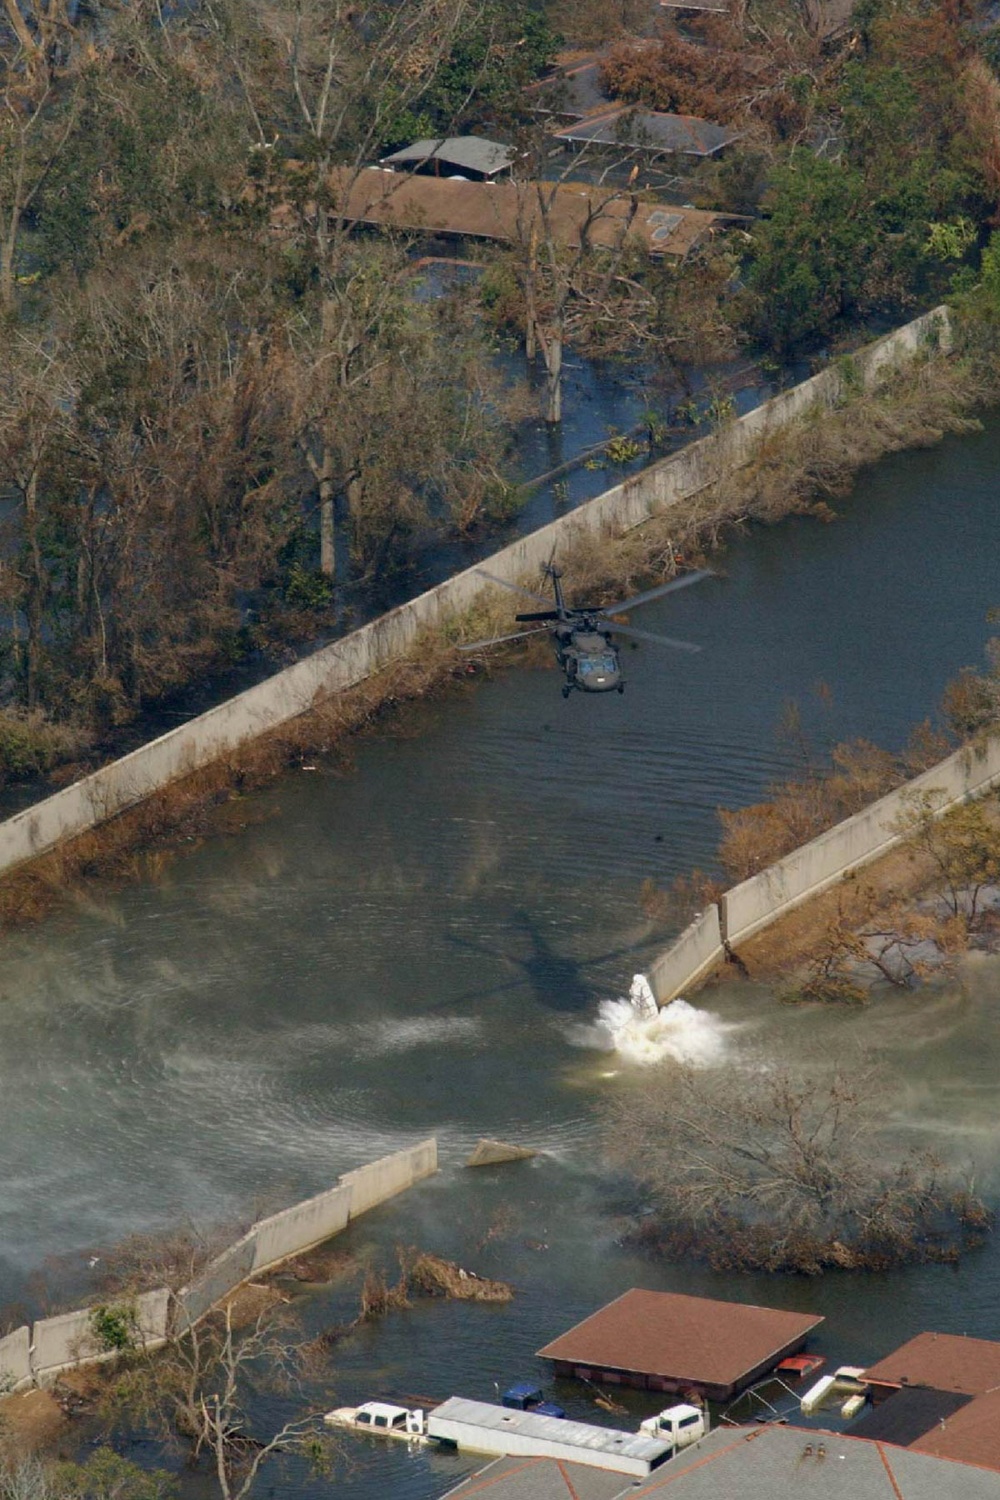 A UH 60 Blackhawk drops a sandbag into a hole in the levee